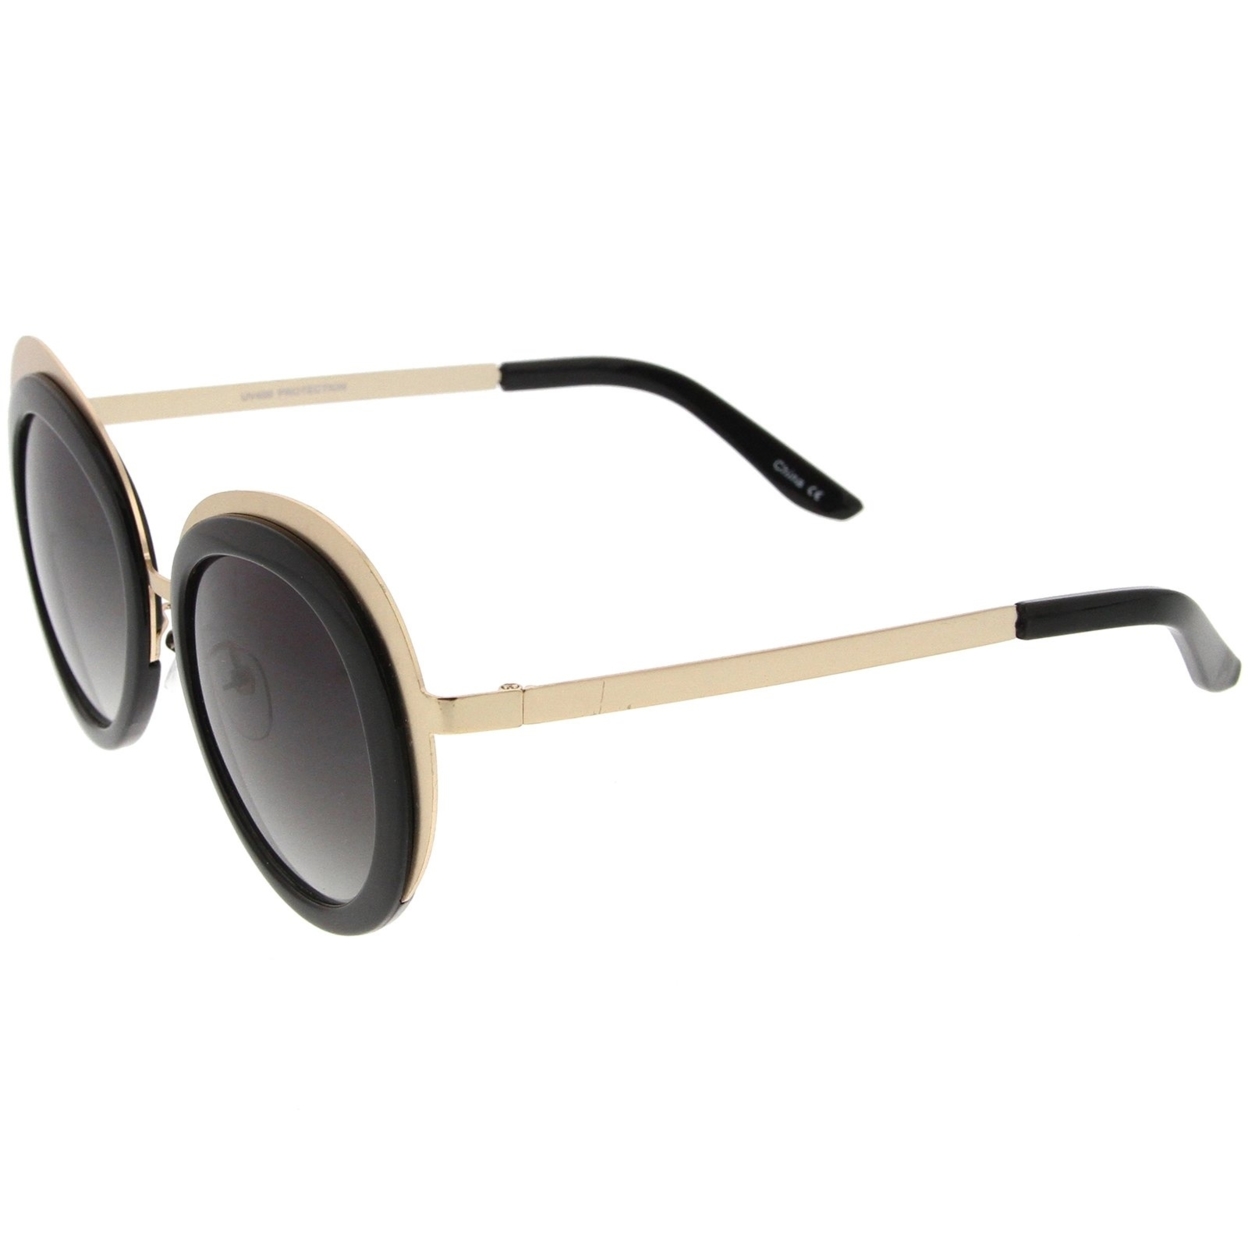 Women's Oversize Two-Tone Metal Frame Border Round Sunglasses 50mm - Gold-Tortoise / Amber